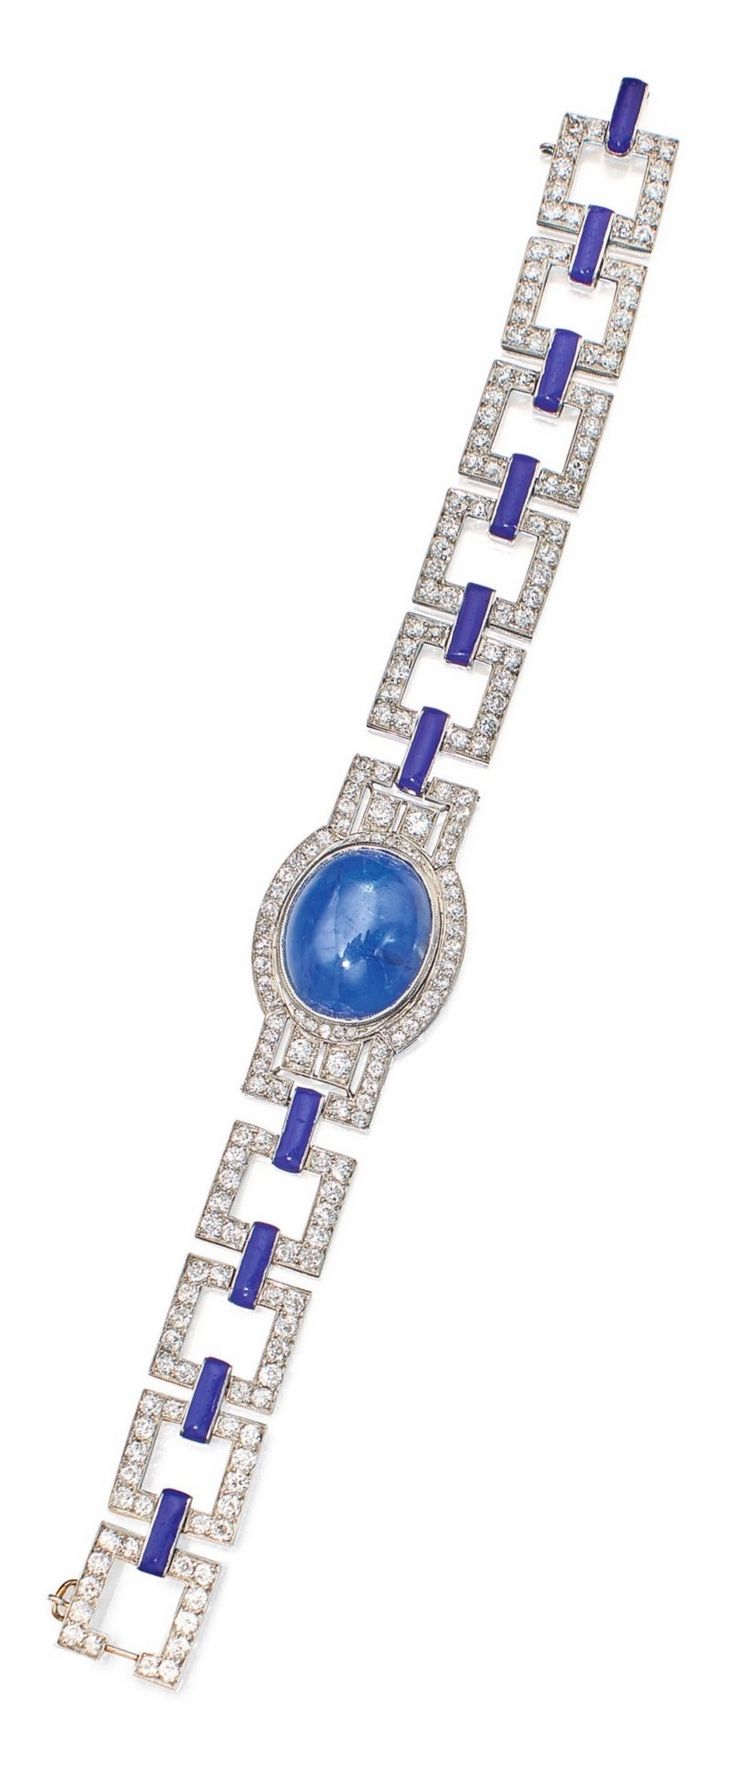 An Art Deco Sapphire and Diamond Bracelet